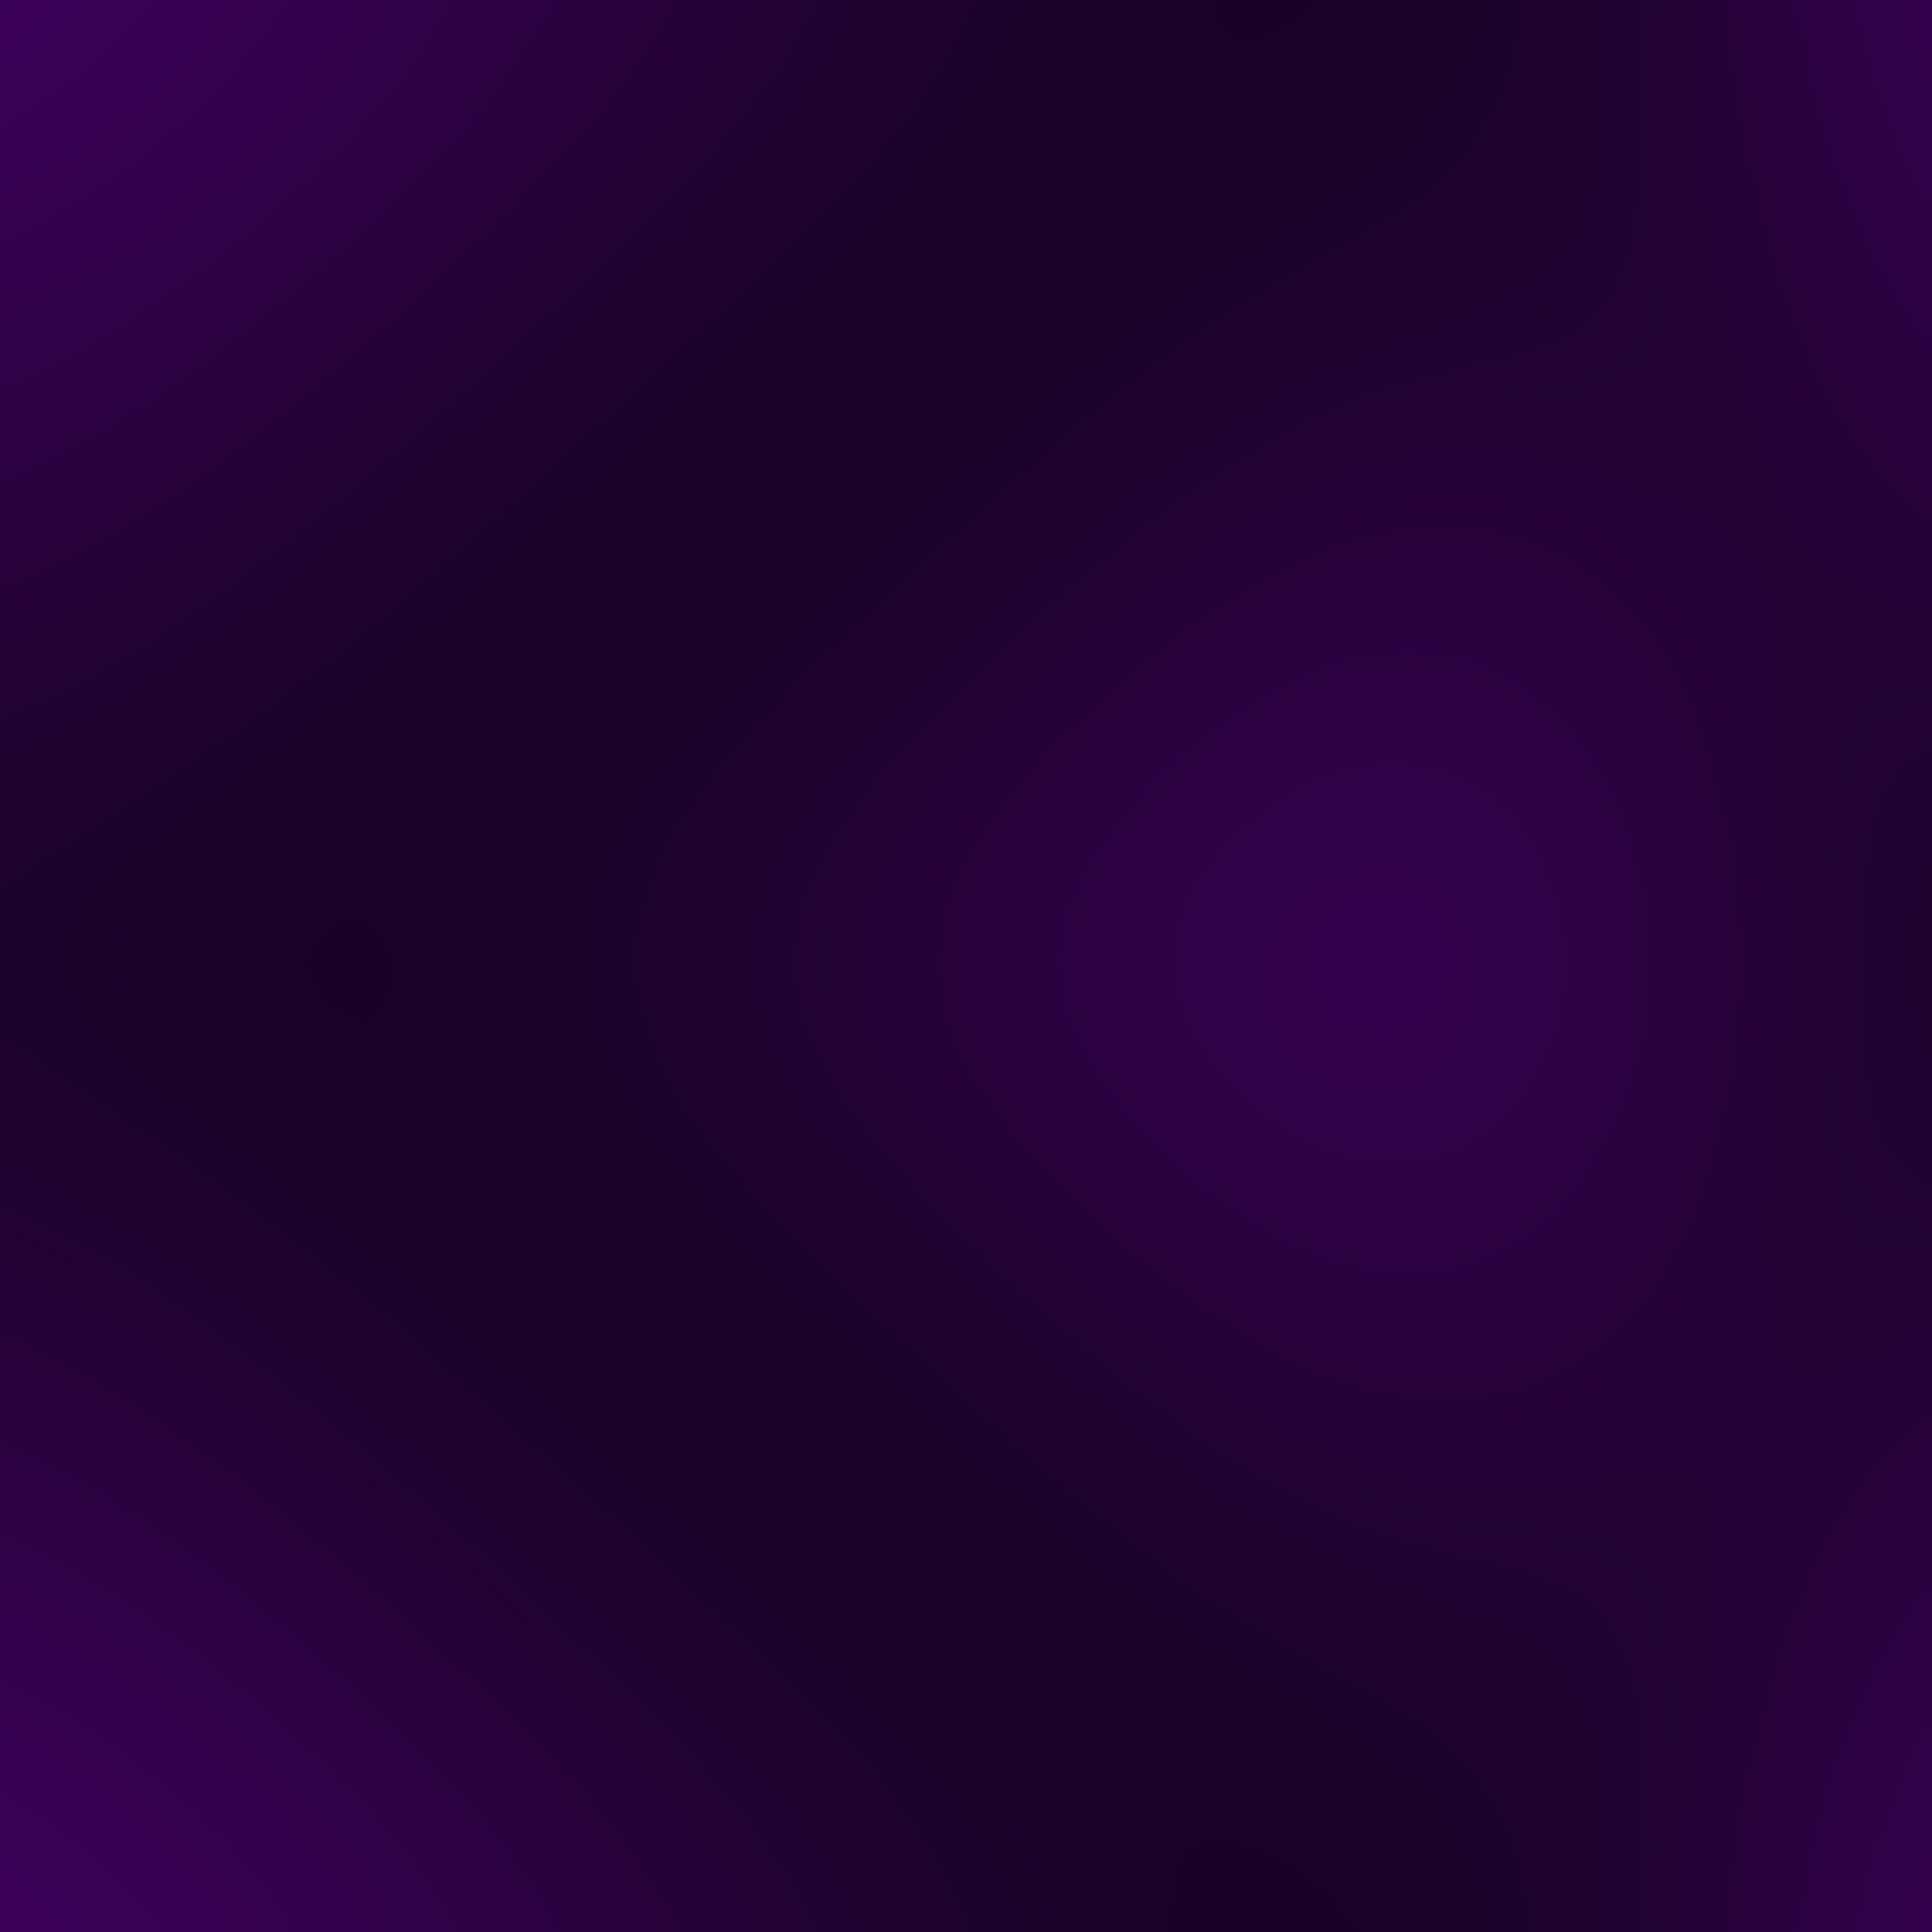 Purple Textured Background Illustration